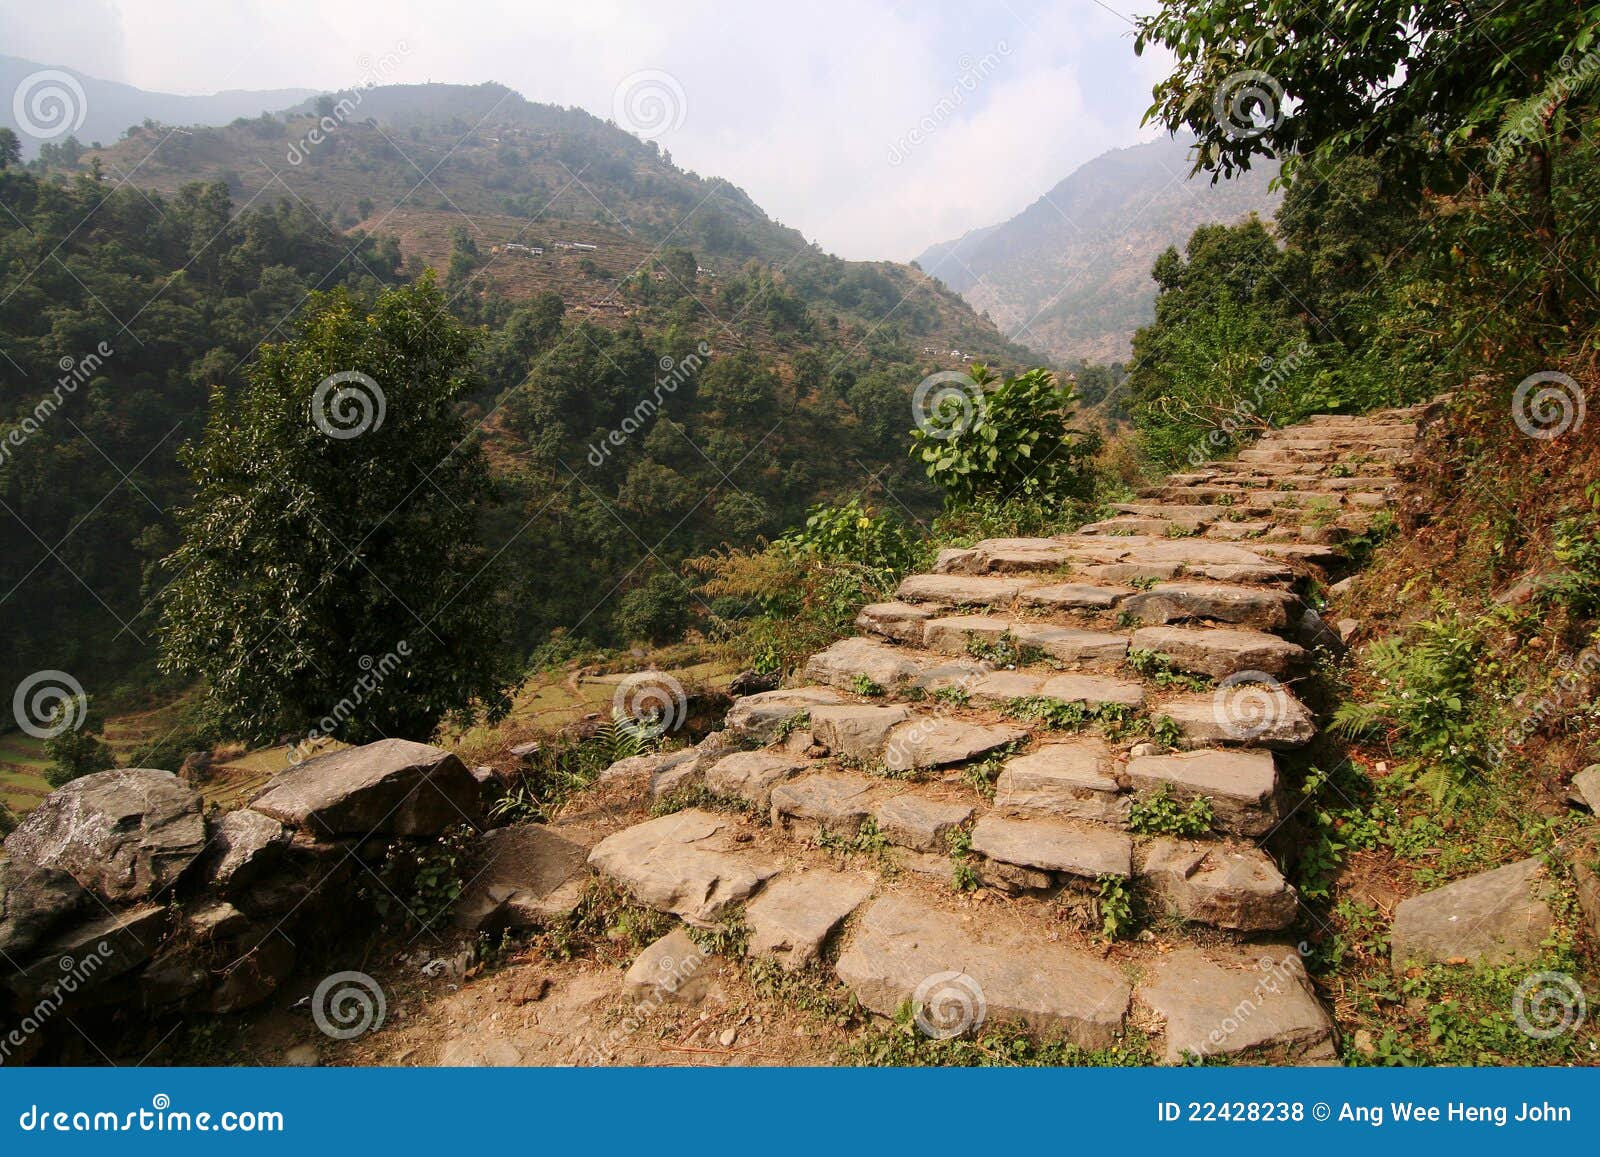 rocky mountain trail staircase